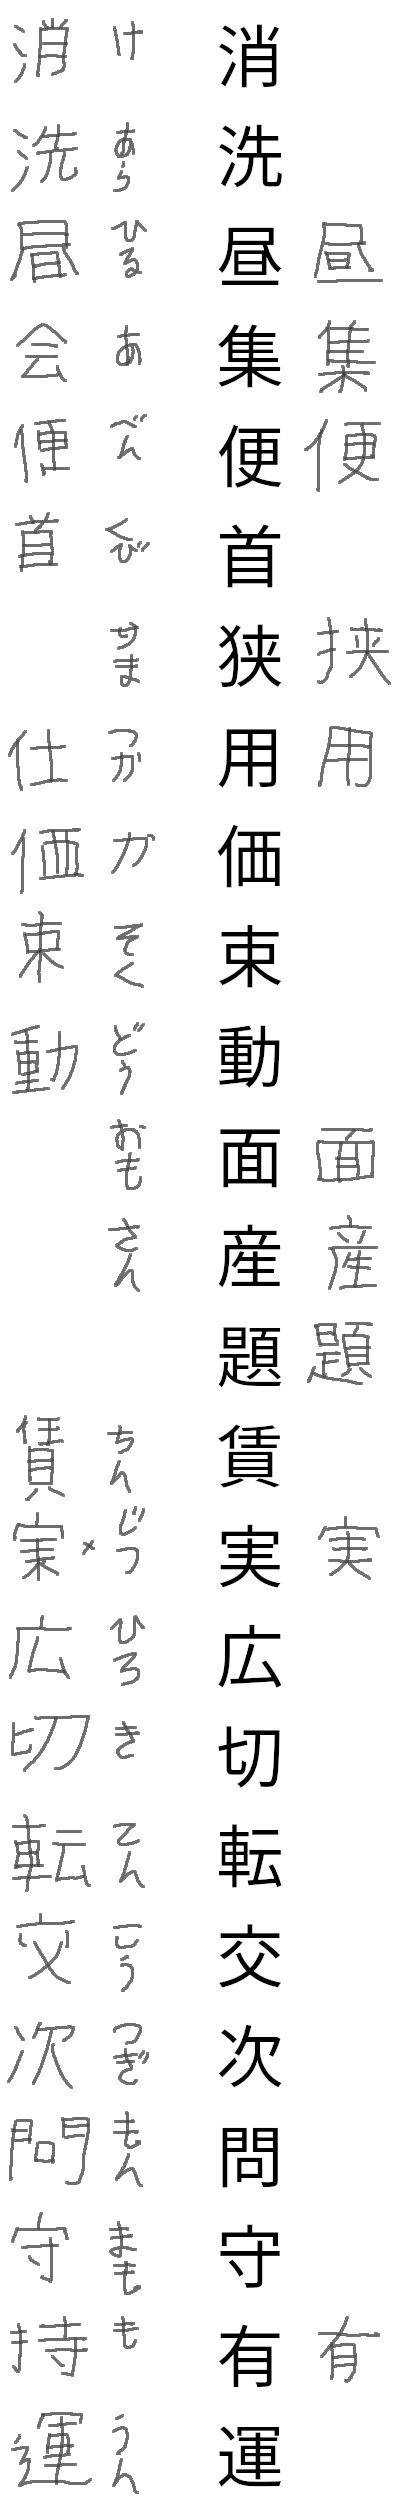 kanji test row 25